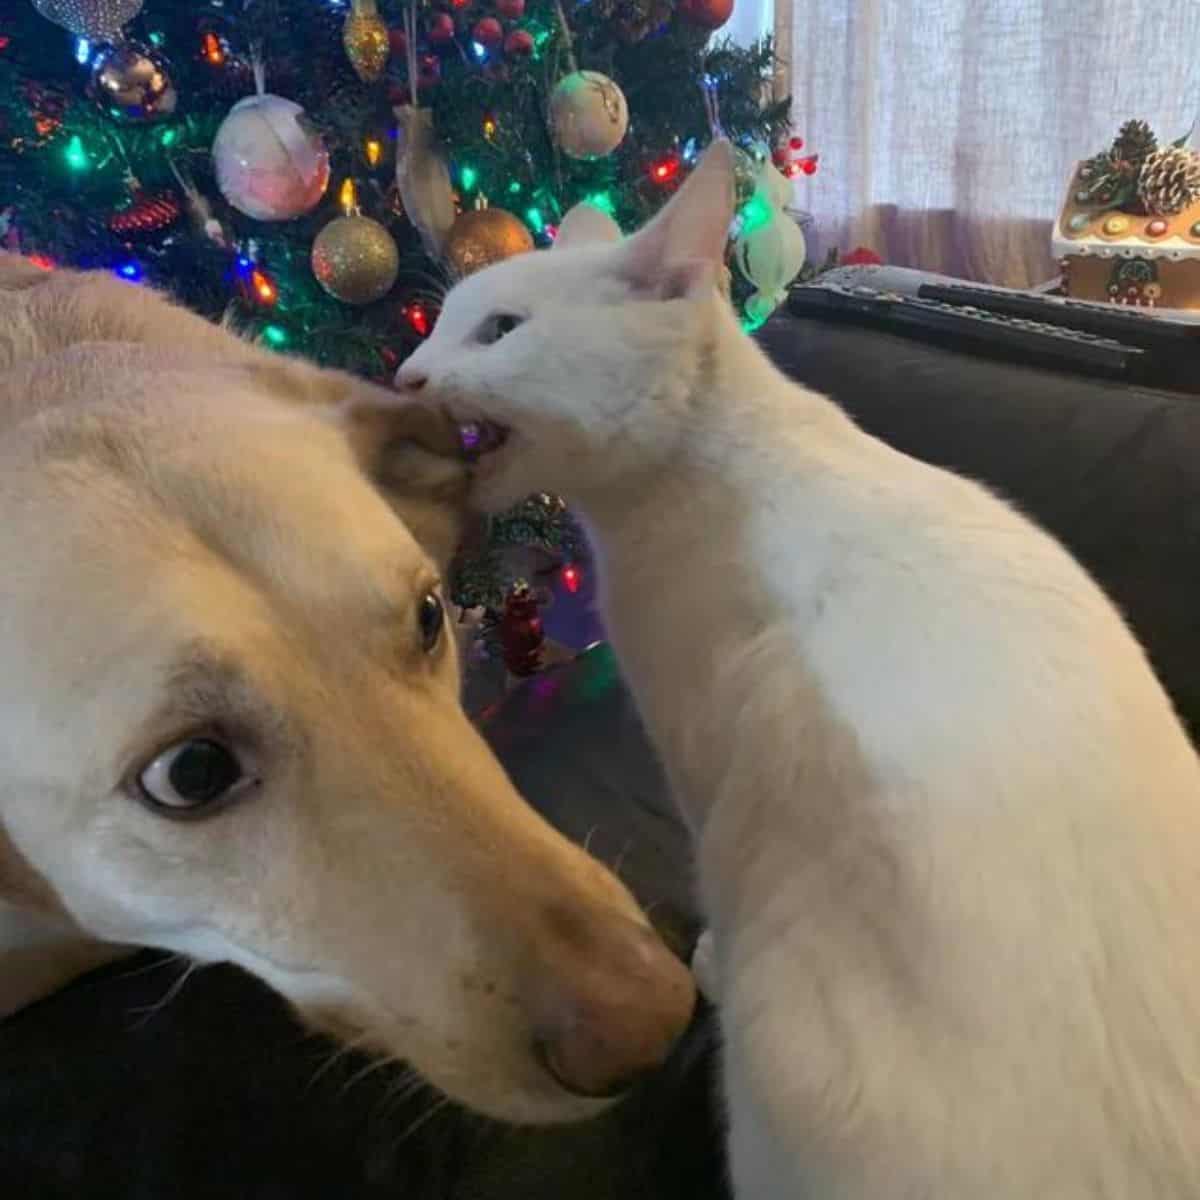 cat biting dog's ear